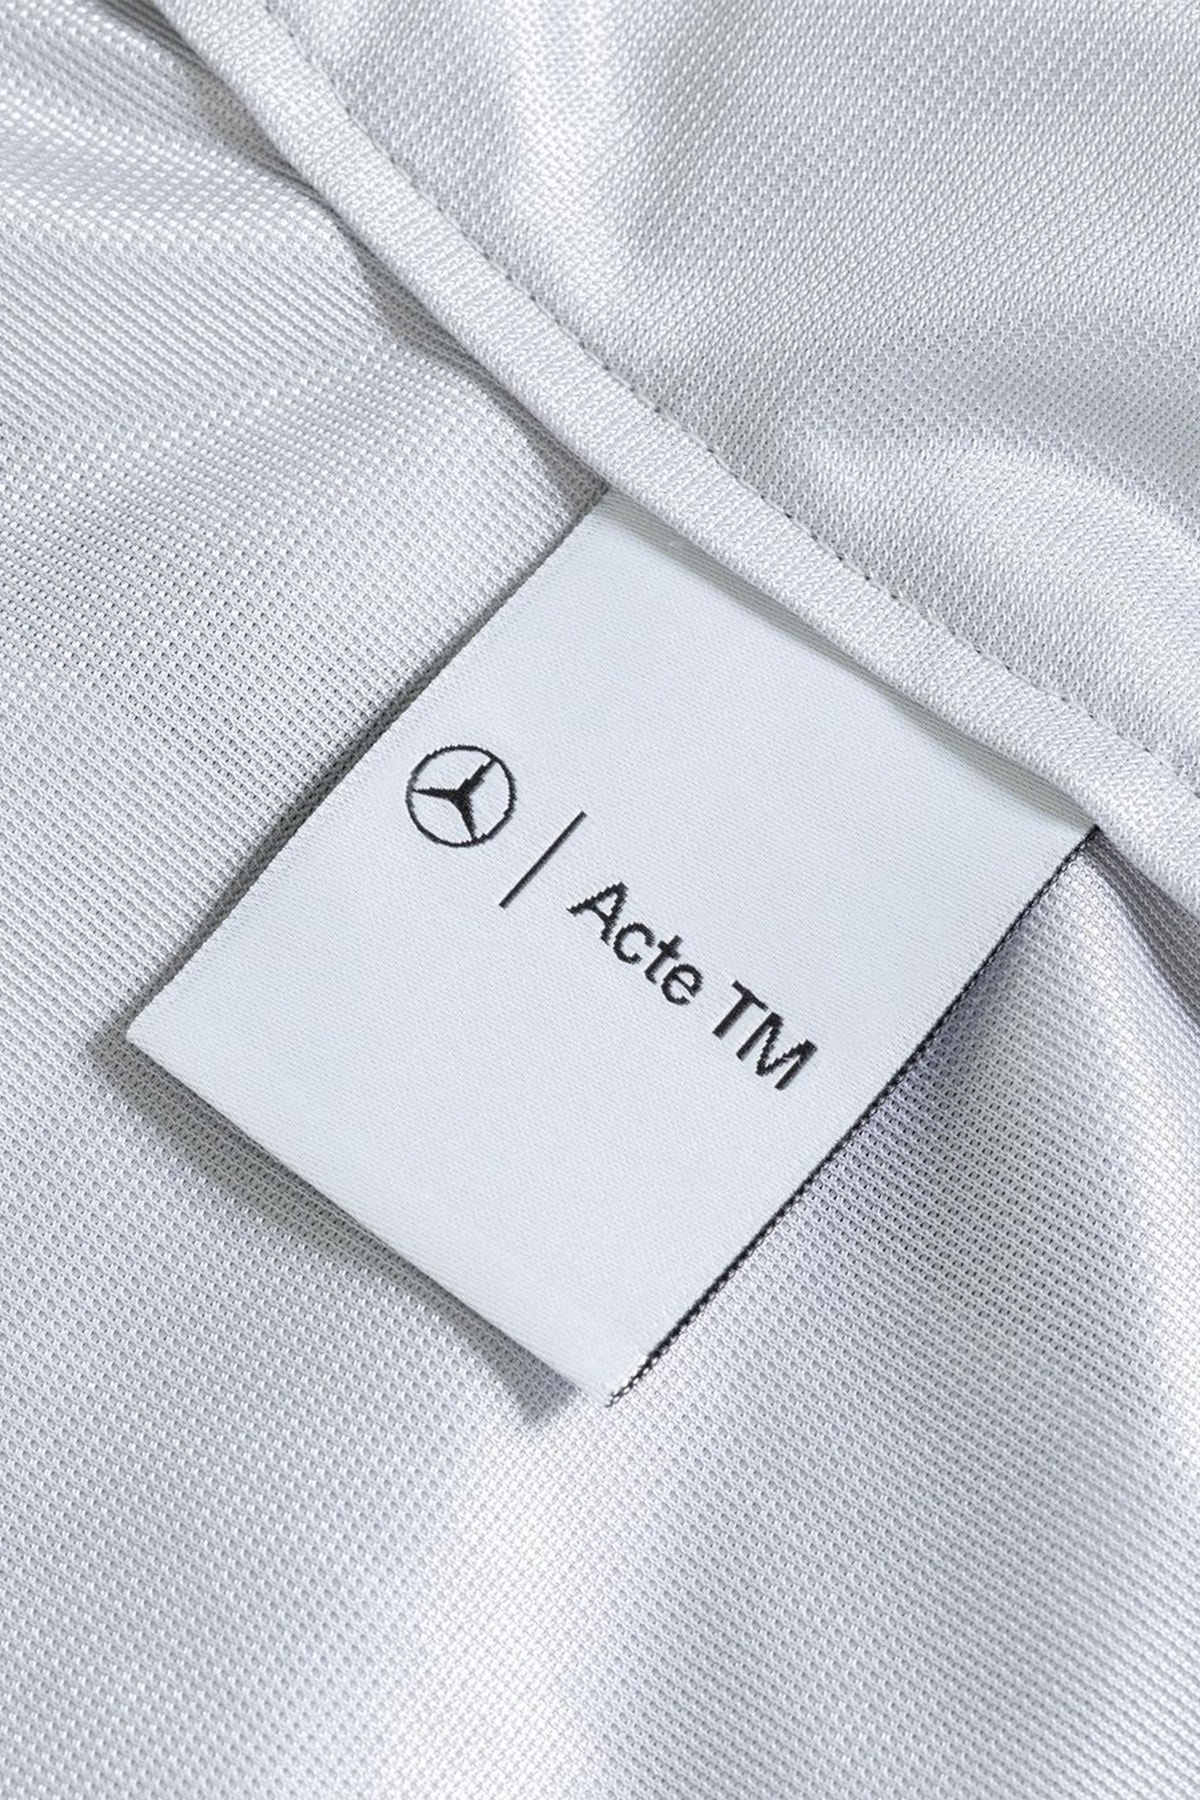 Mercedes-Benz x Acte TM 全新聯名系列發佈